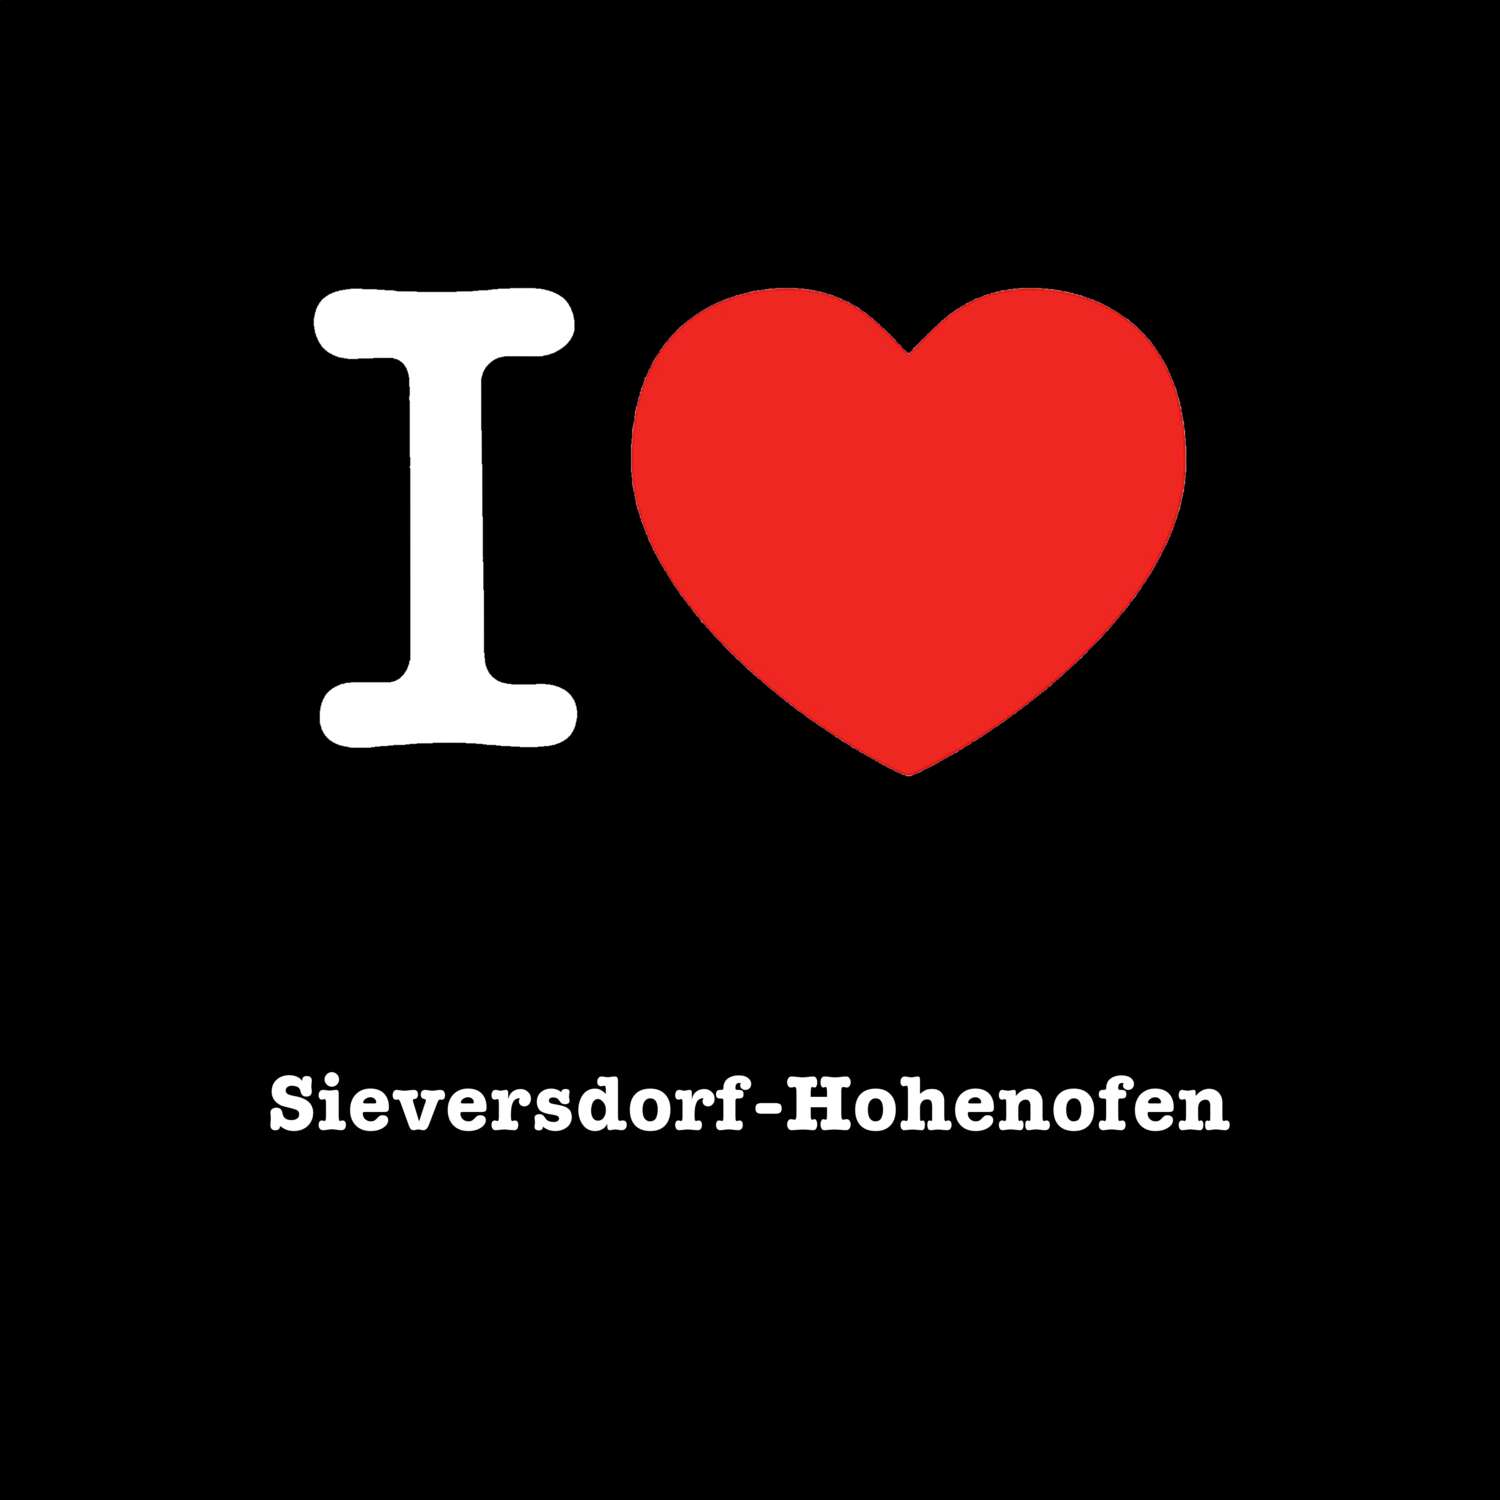 Sieversdorf-Hohenofen T-Shirt »I love«